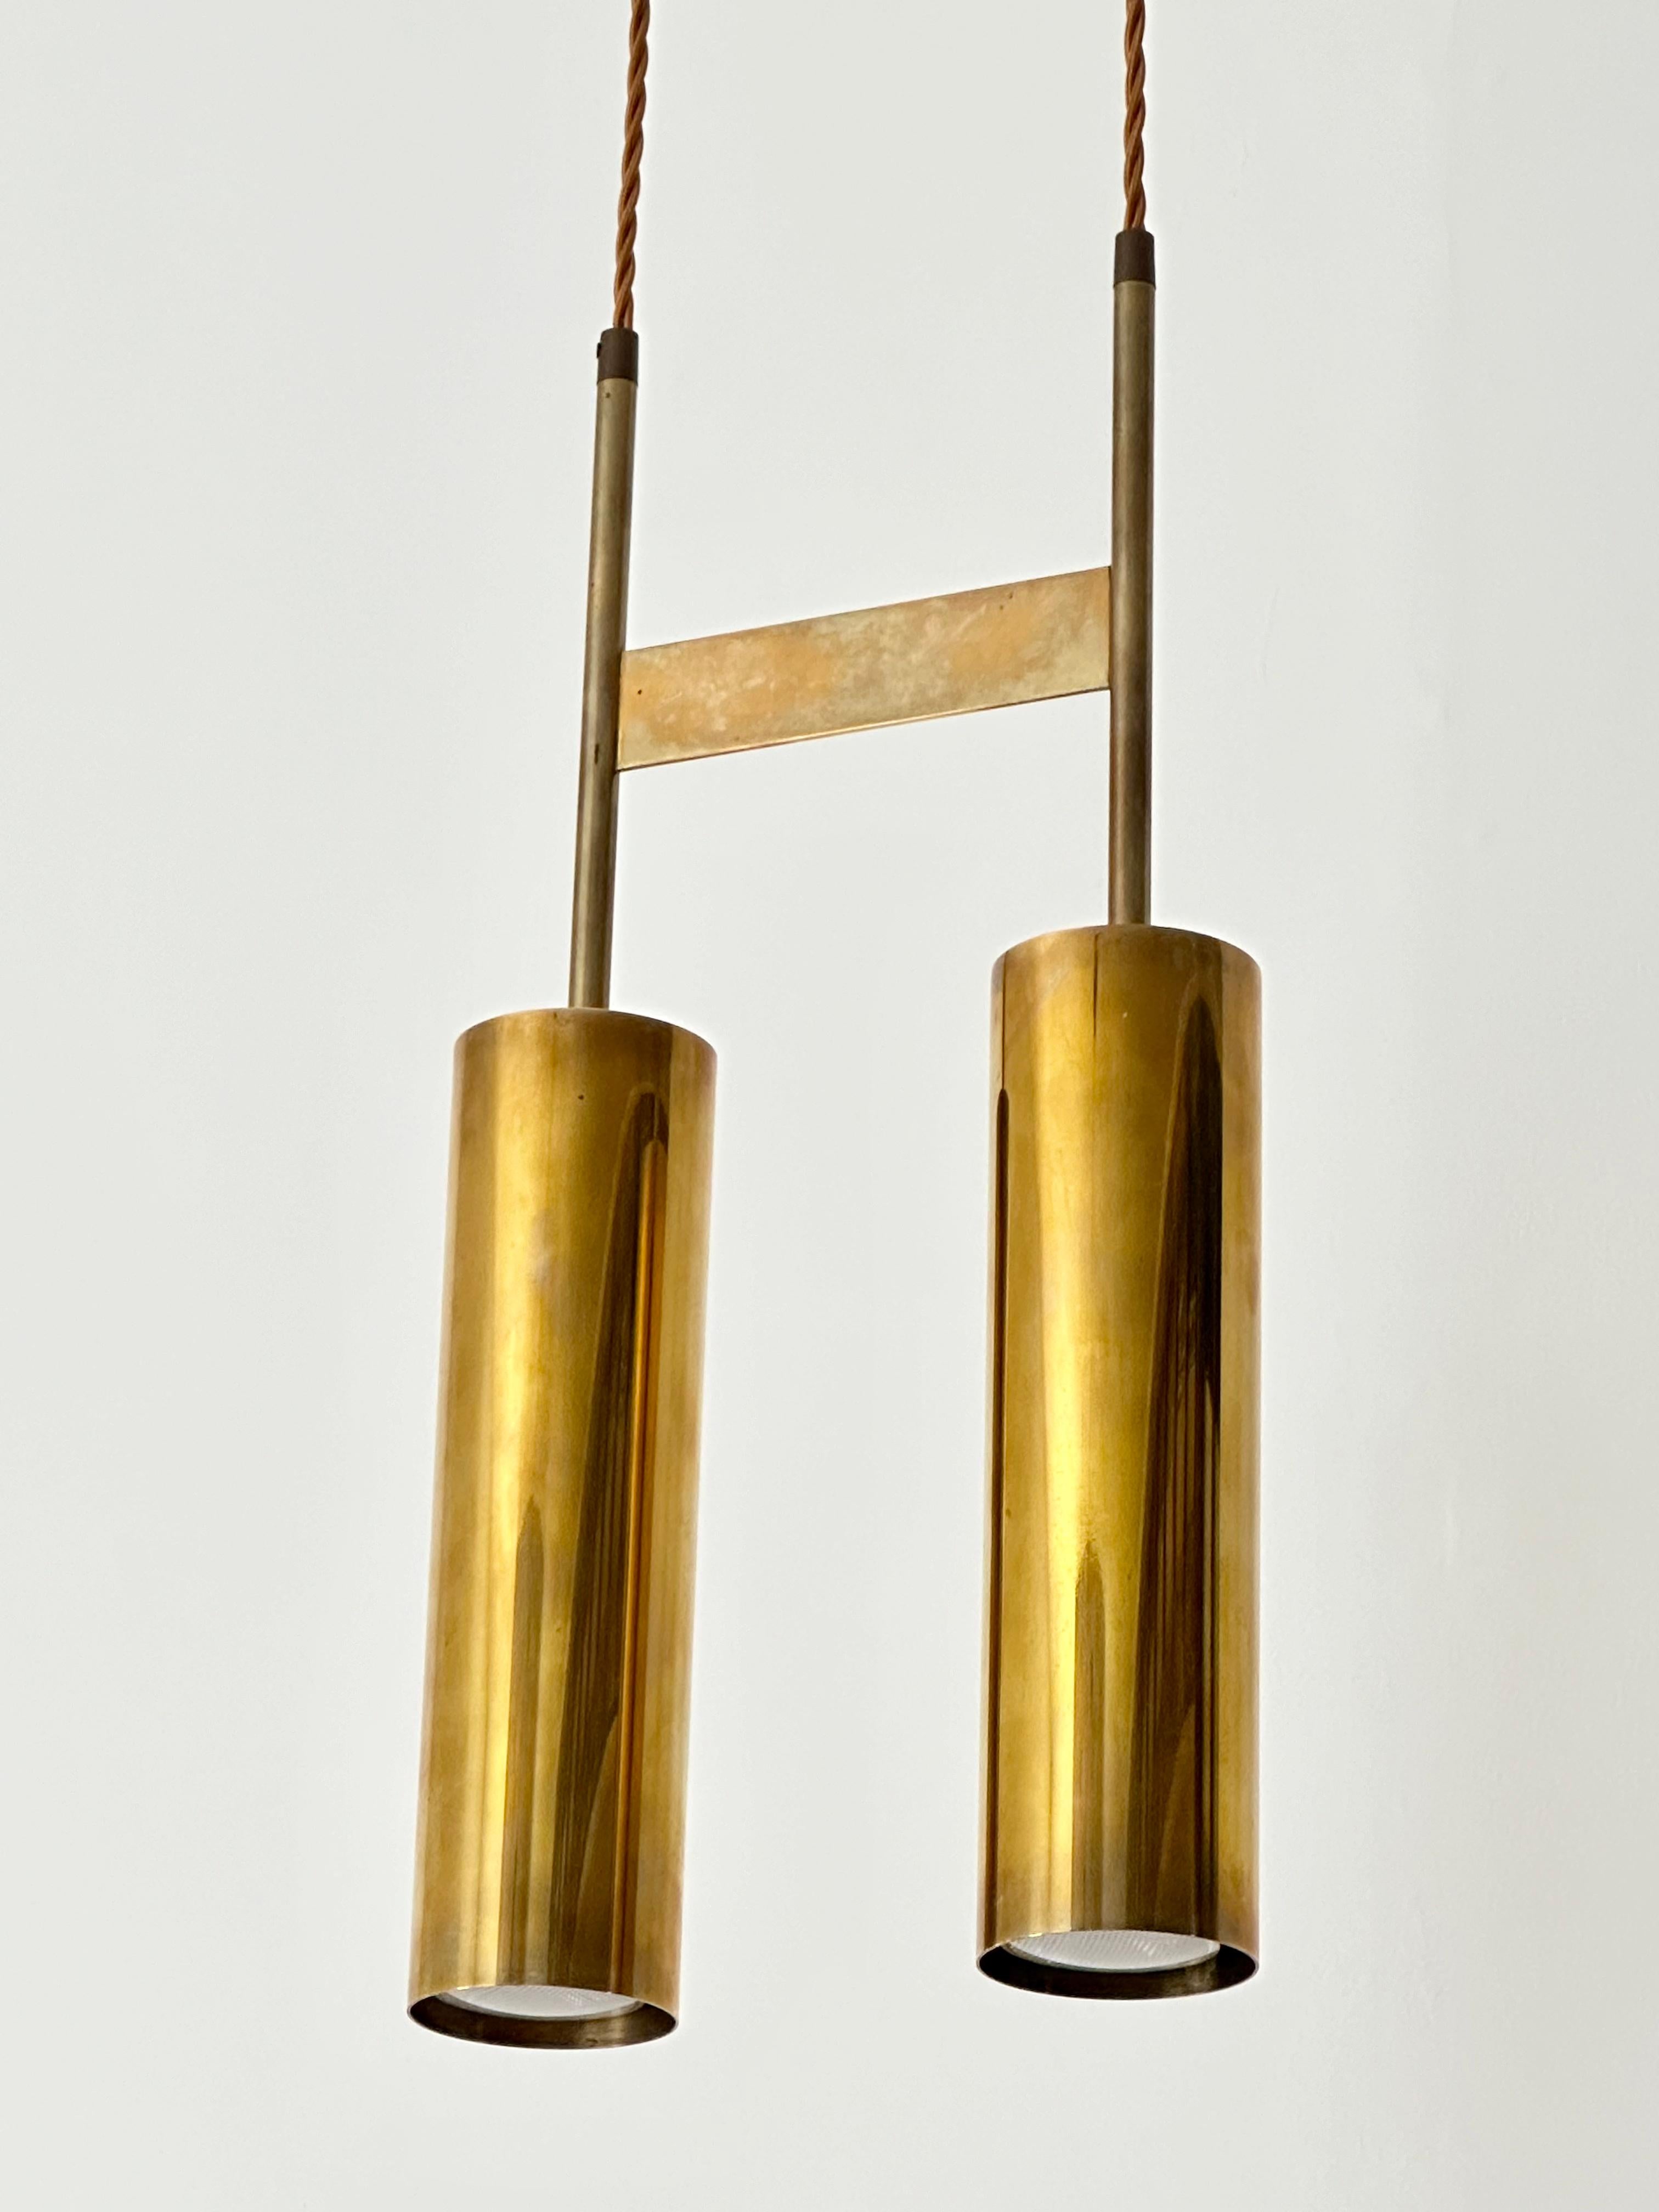 Danish Modernist Solid Brass Double Cylinder Pendant Light Fixture, 1960s  For Sale